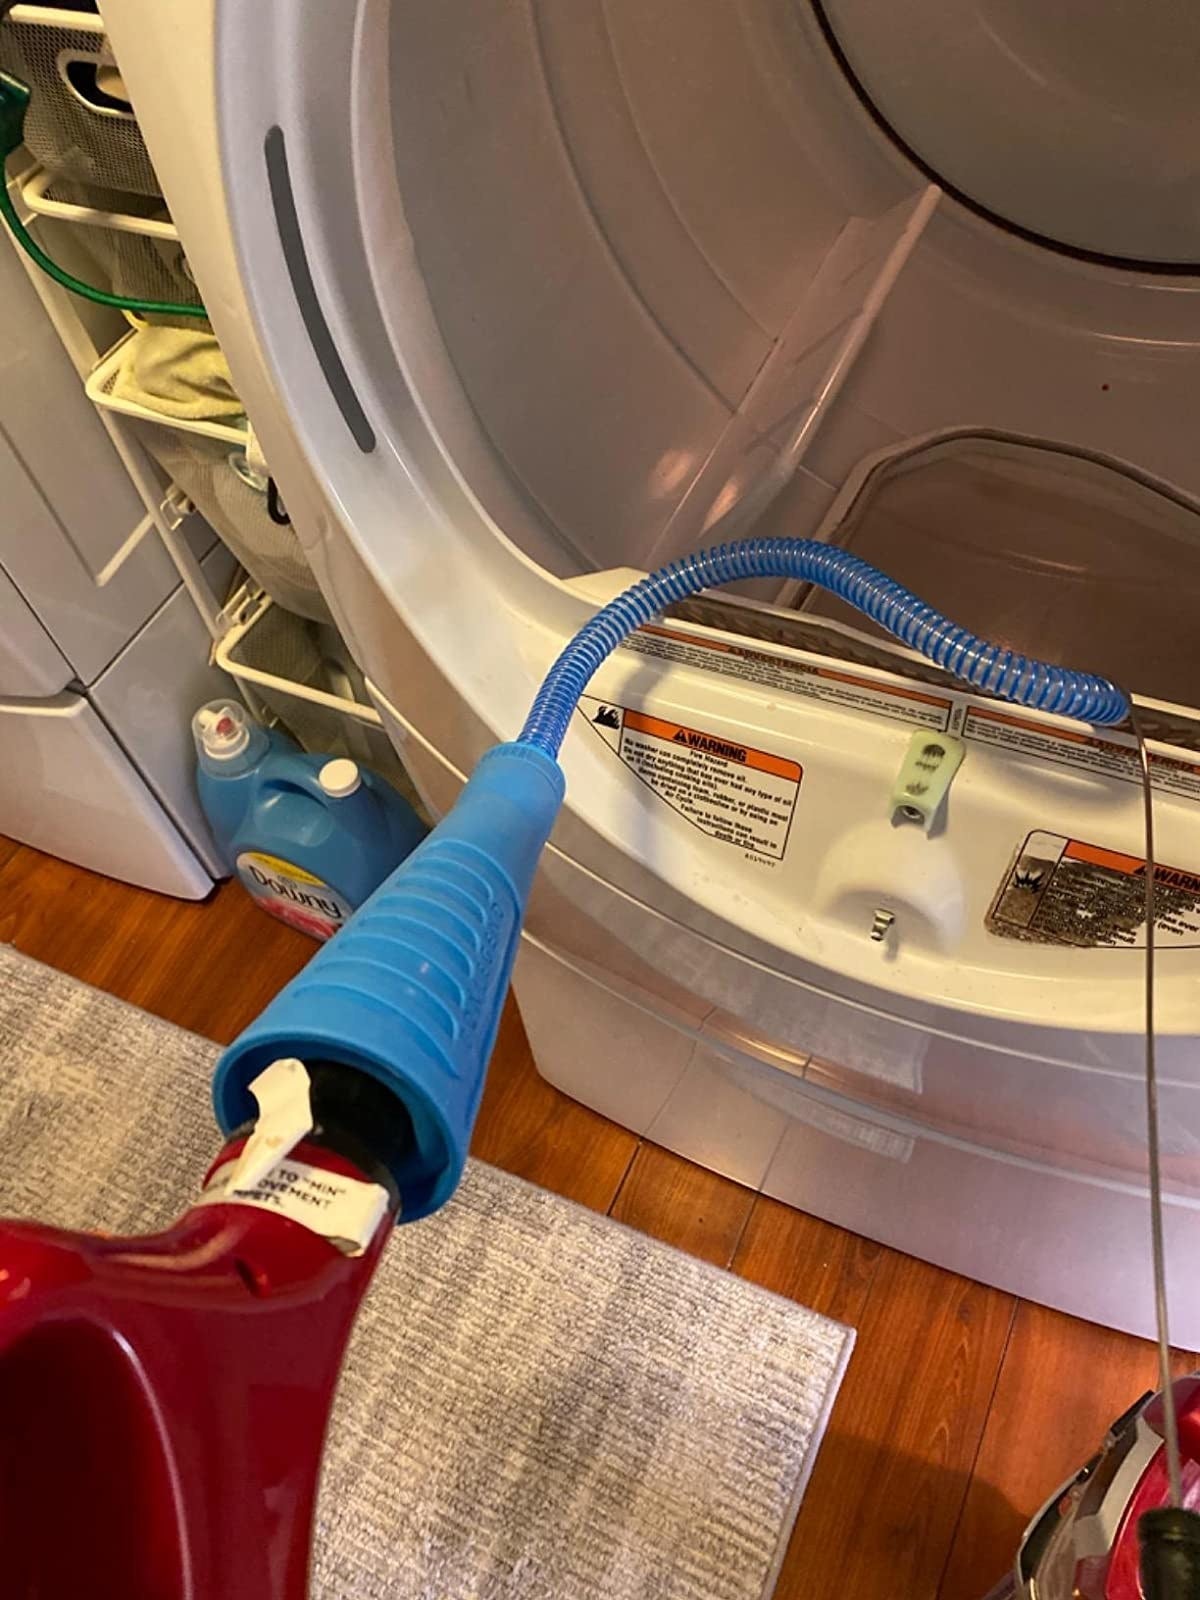 Lint Catcher Multipurposes Laundry Hair Lint Catcher Pouch Reusable Washing  Machine Filter Bag Pet H on Luulla